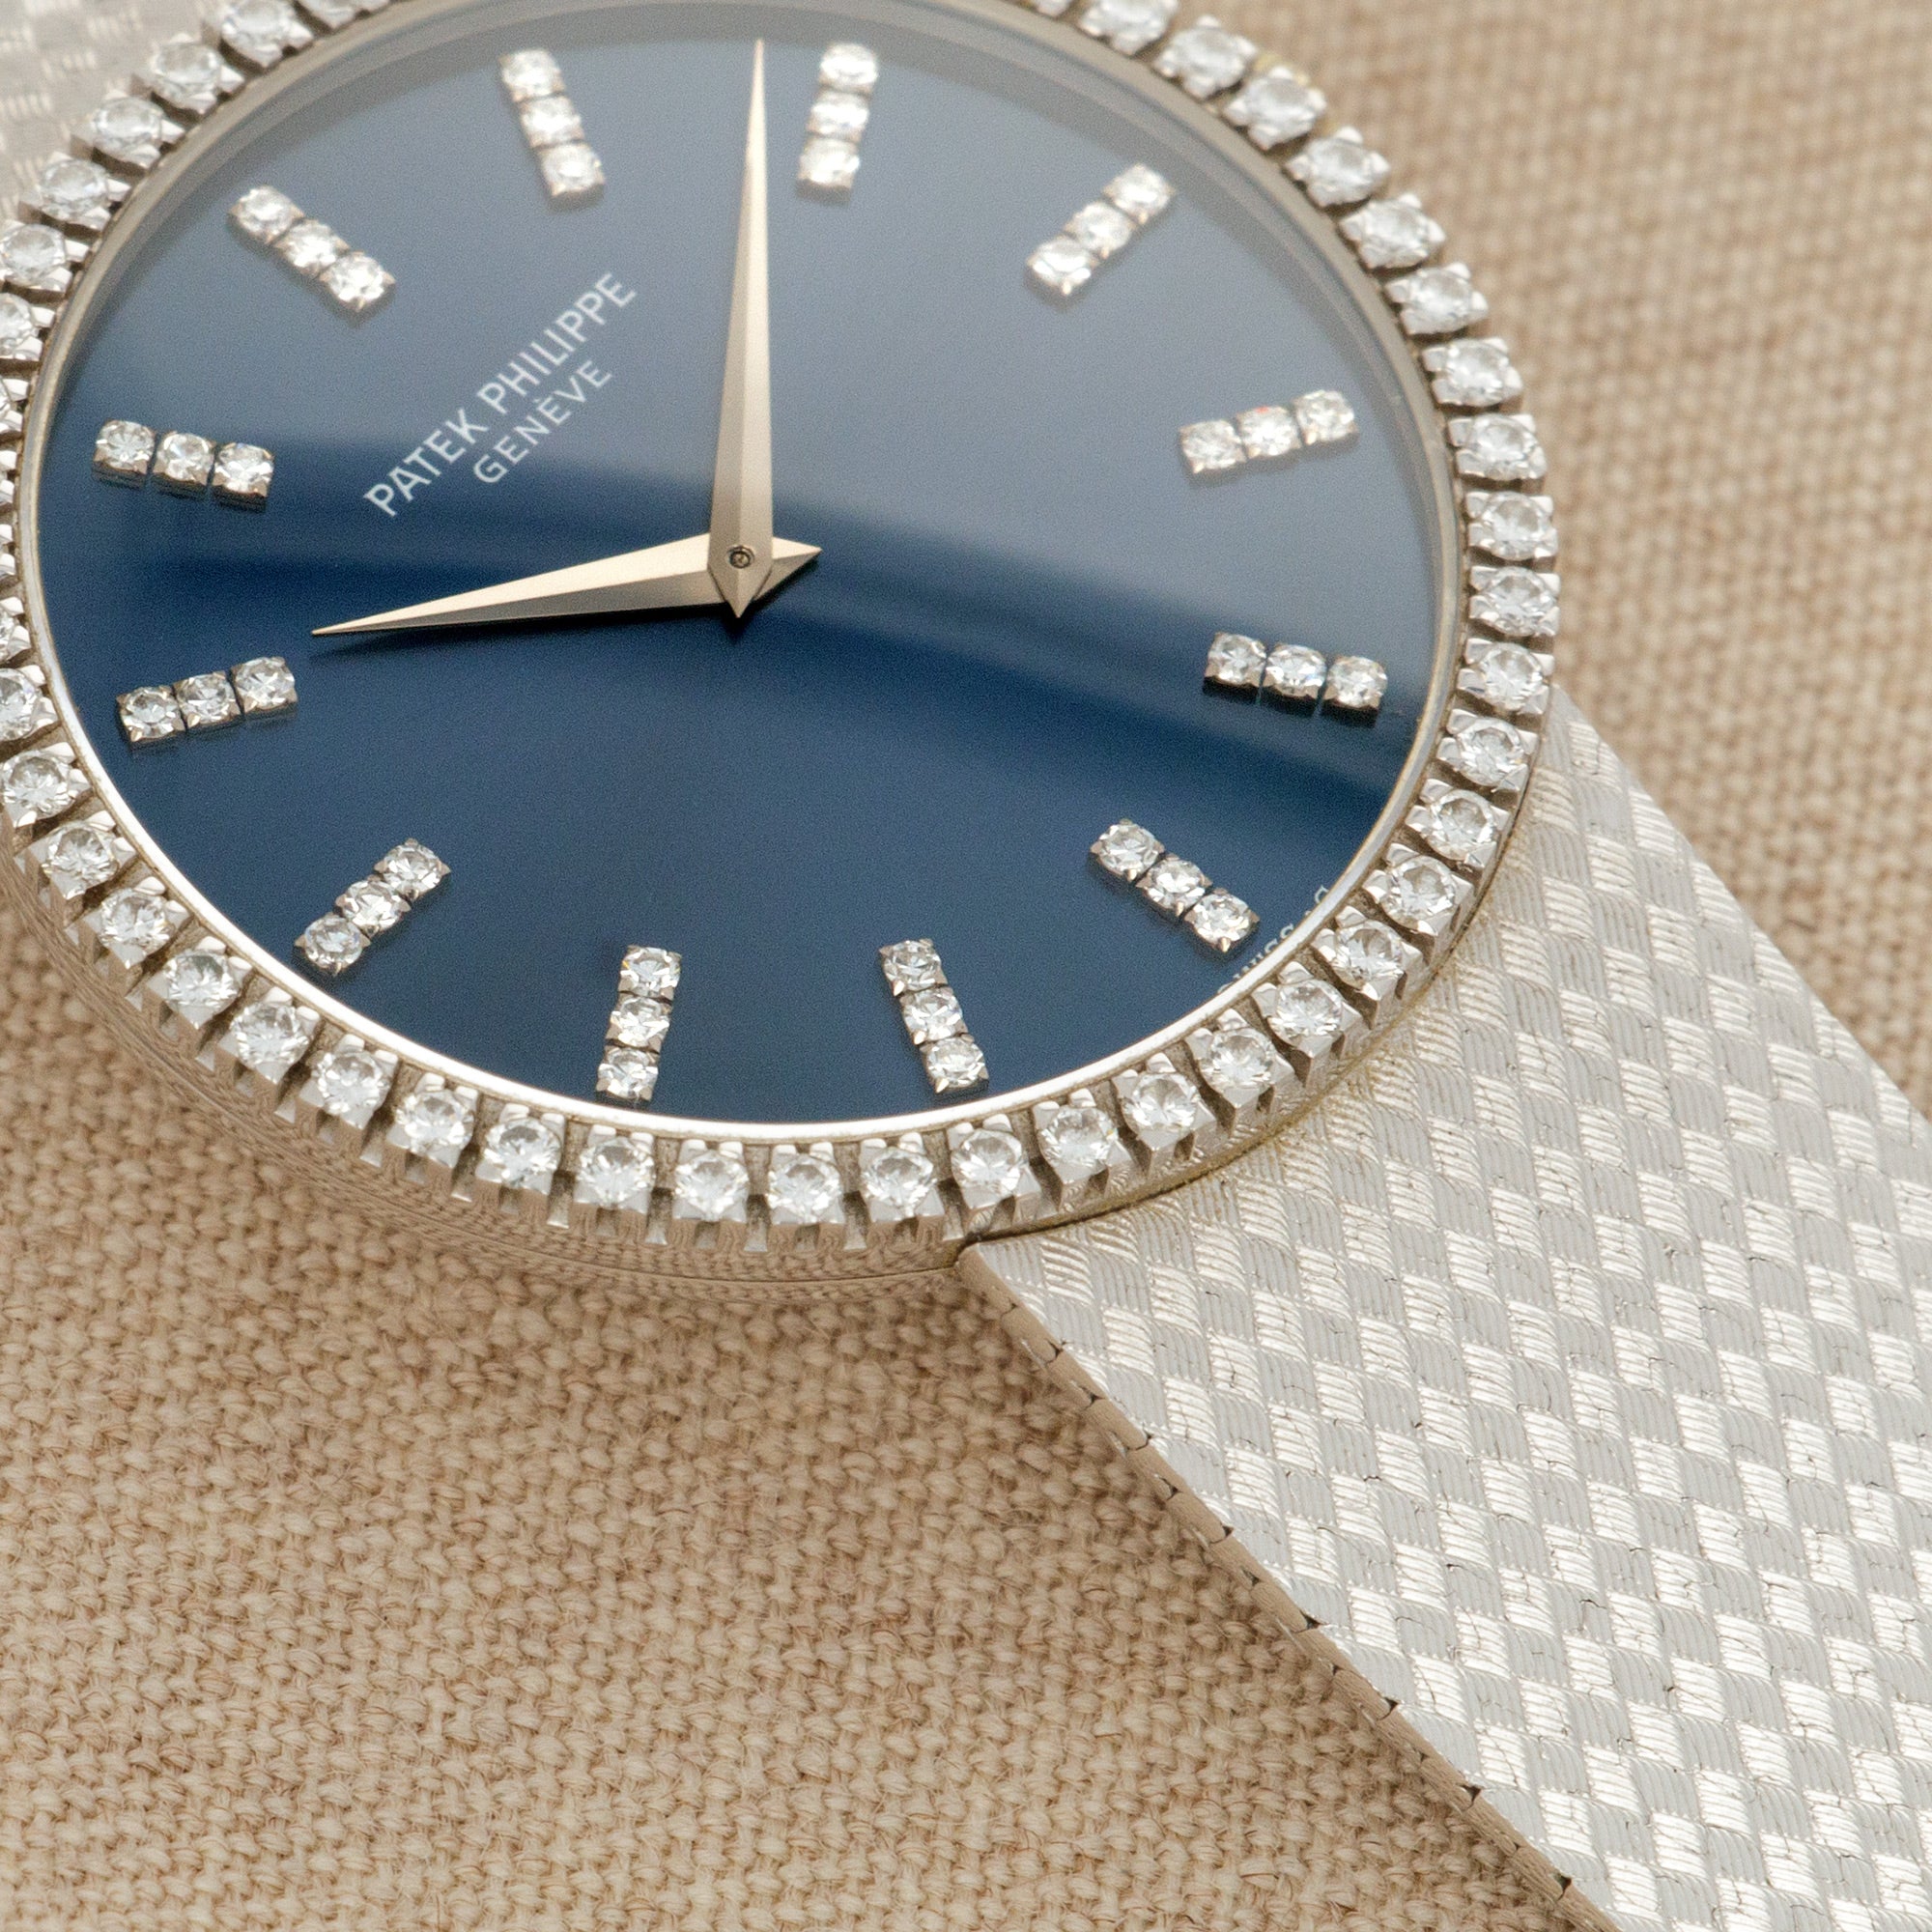 Patek Philippe - Patek Philippe White Gold Calatrava Watch Ref. 3759 with Original Diamond Bezel and Dial - The Keystone Watches